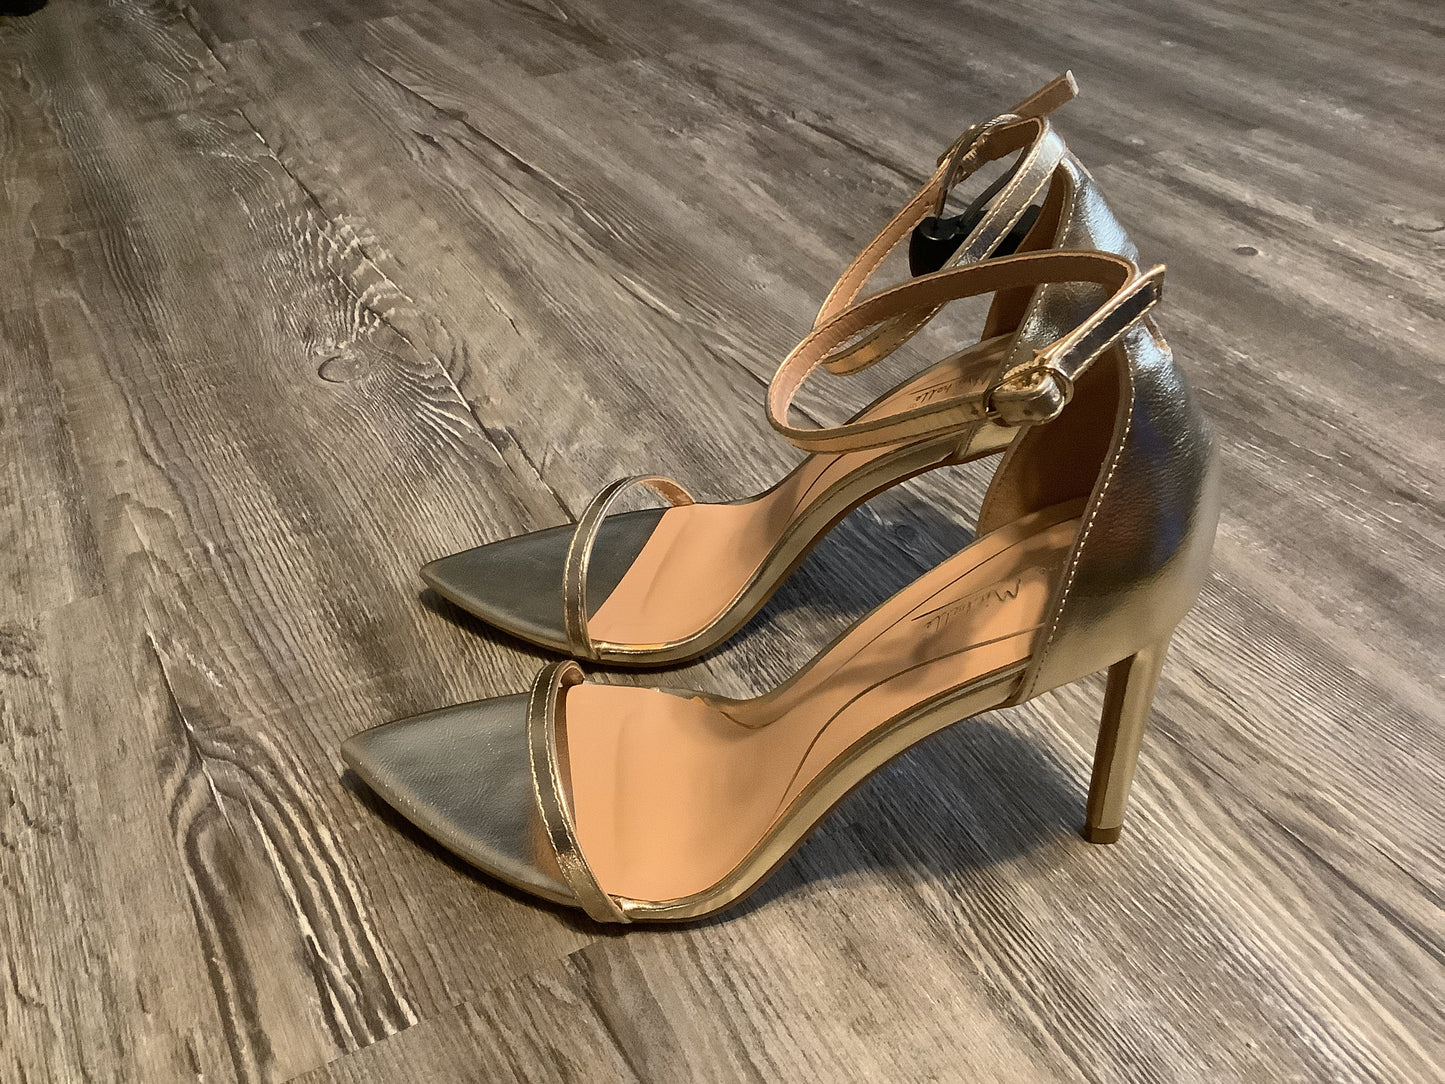 Gold Shoes Heels Stiletto Anne Michelle, Size 7.5